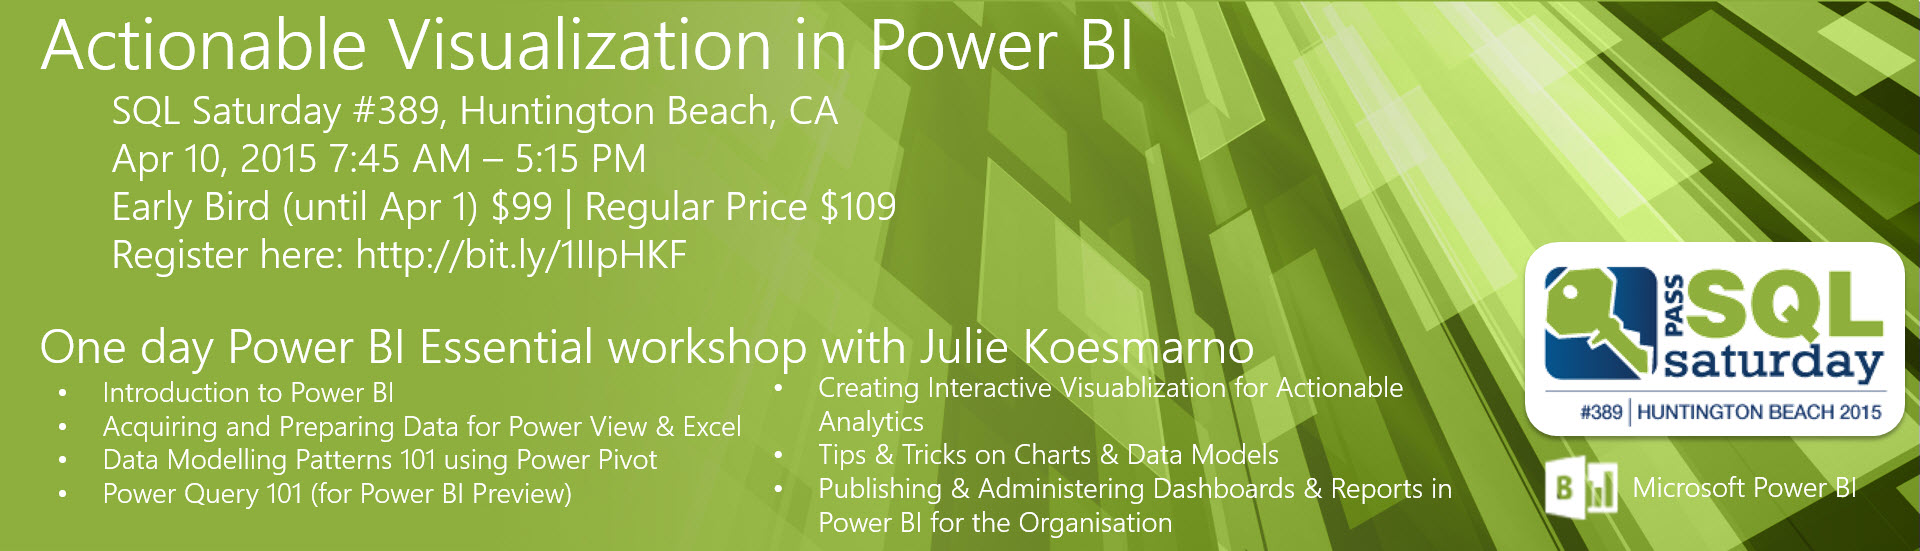 Power BI Precon on Apr 10, 2015 at Huntington Beach, CA